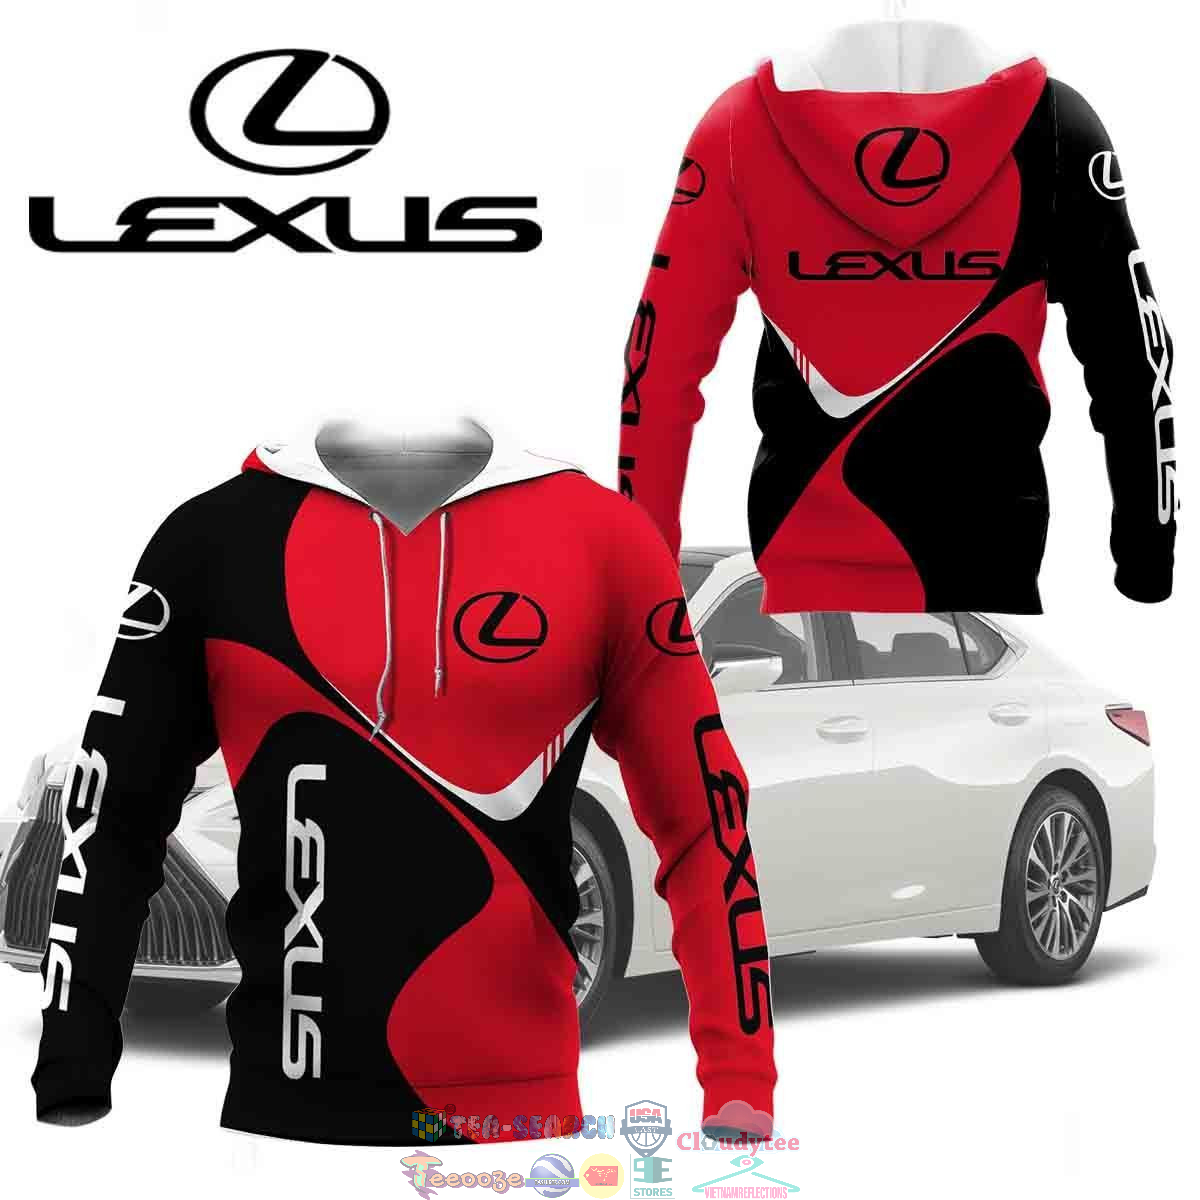 Lexus ver 11 3D hoodie and t-shirt